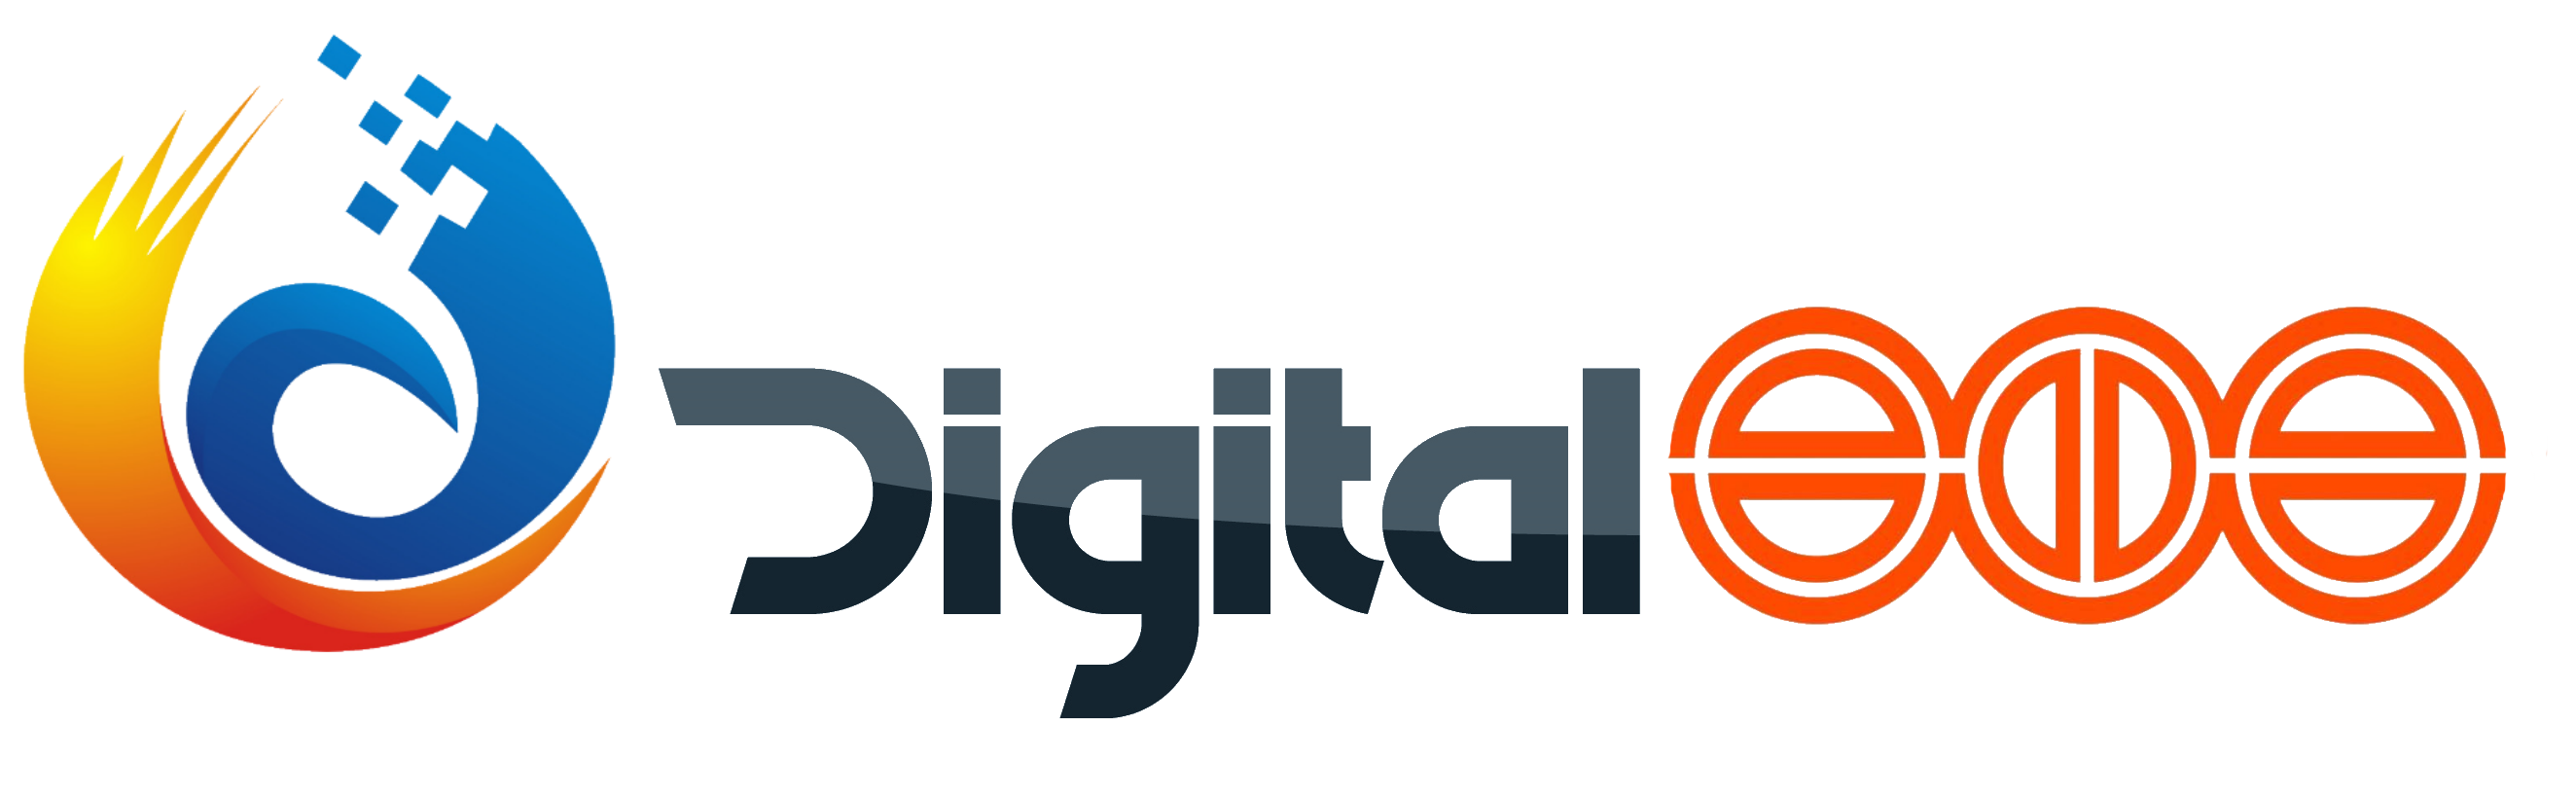 Digital-logo